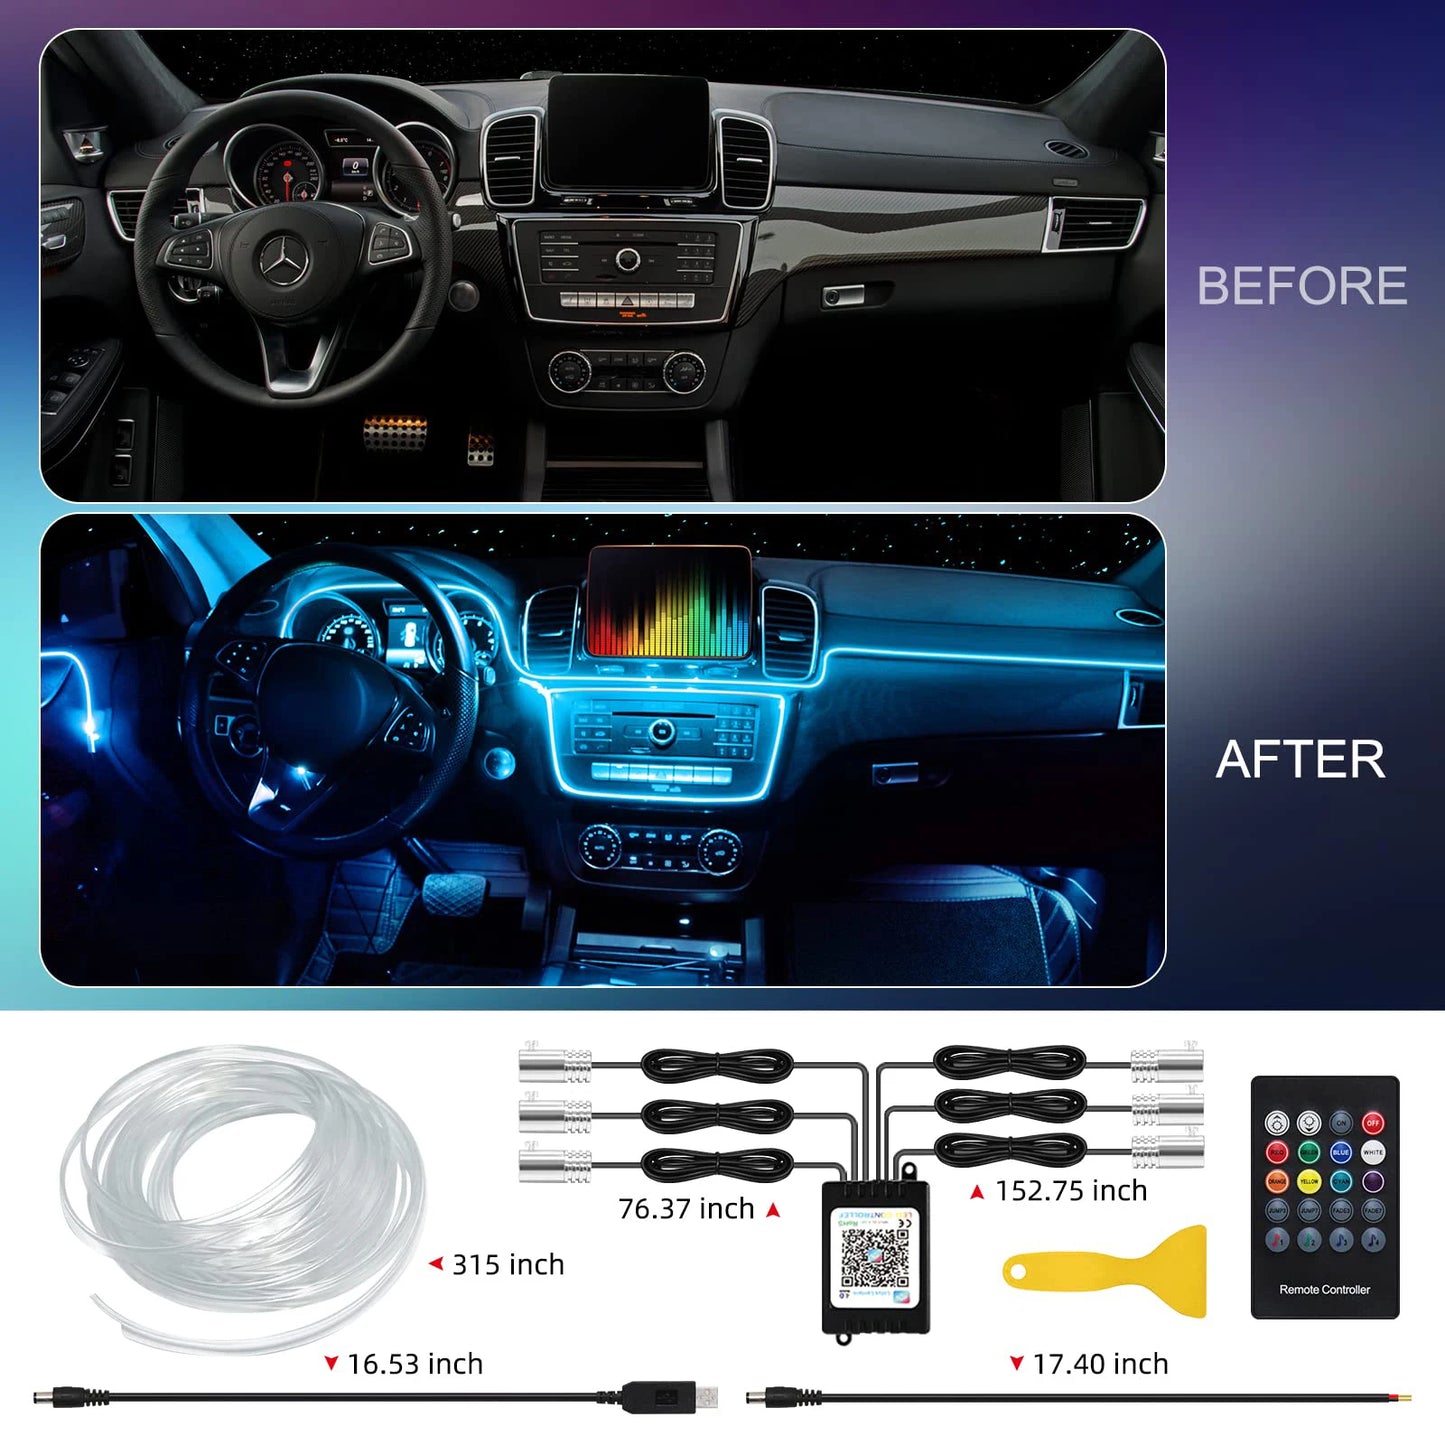 LED Car Interior Ambient Strip Lights RGB Fiber Optic Atmosphere Neon Lighting Kit W/ APP Remote Control Auto Decorative Lamps